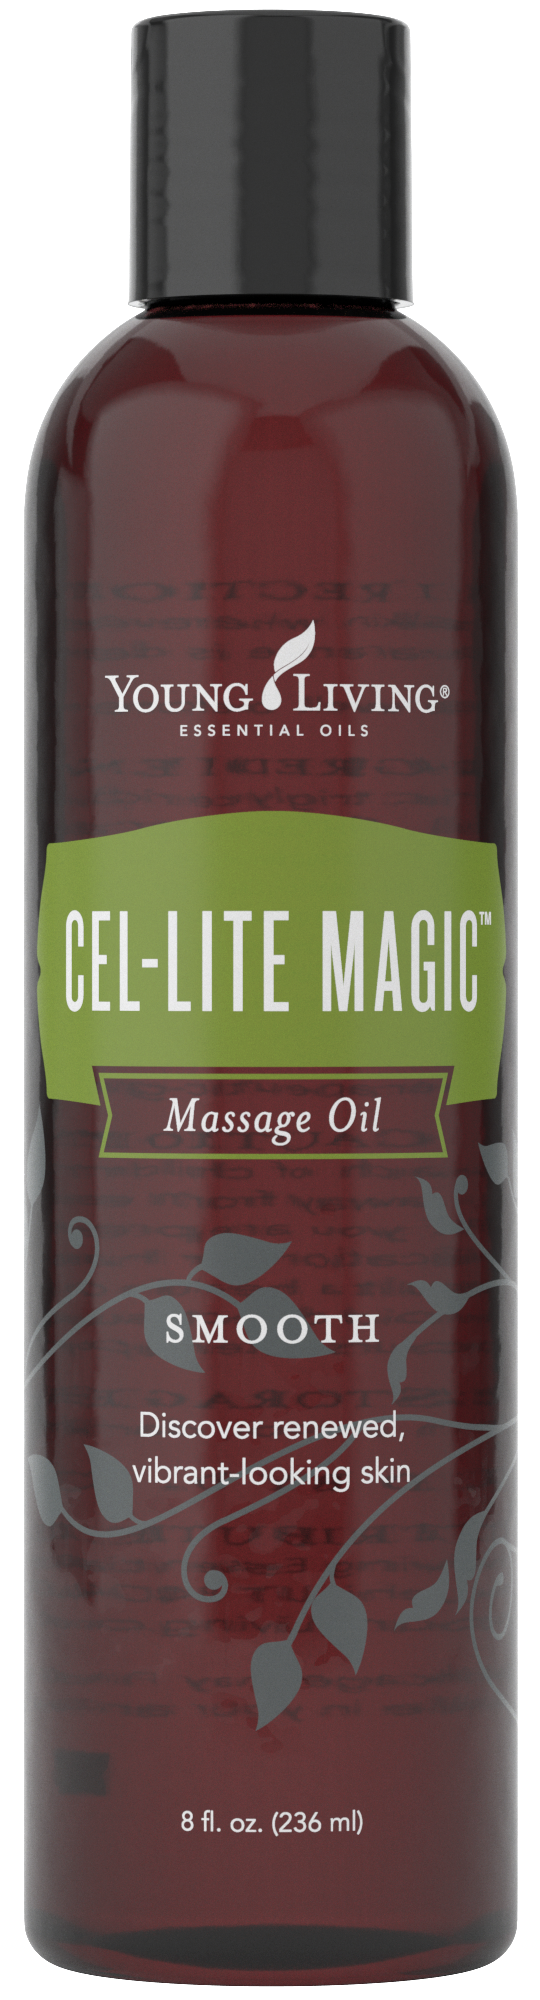 Cel-Lite Magic Massage Oil Silo.png